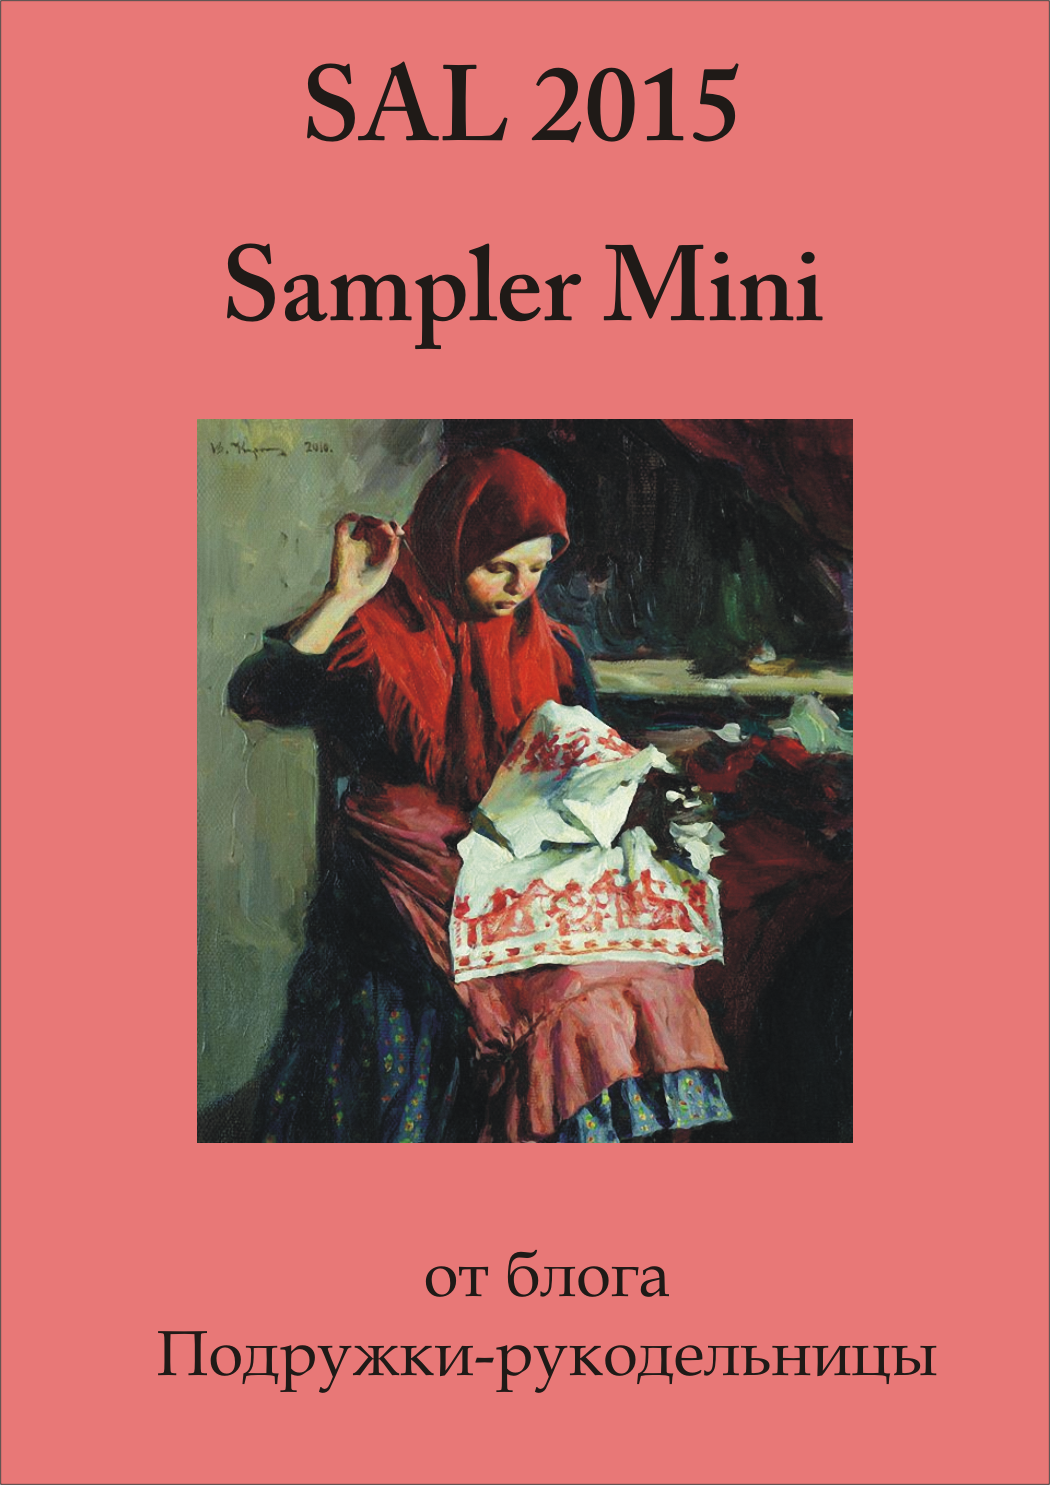 SAL 2015 Sampler Mini